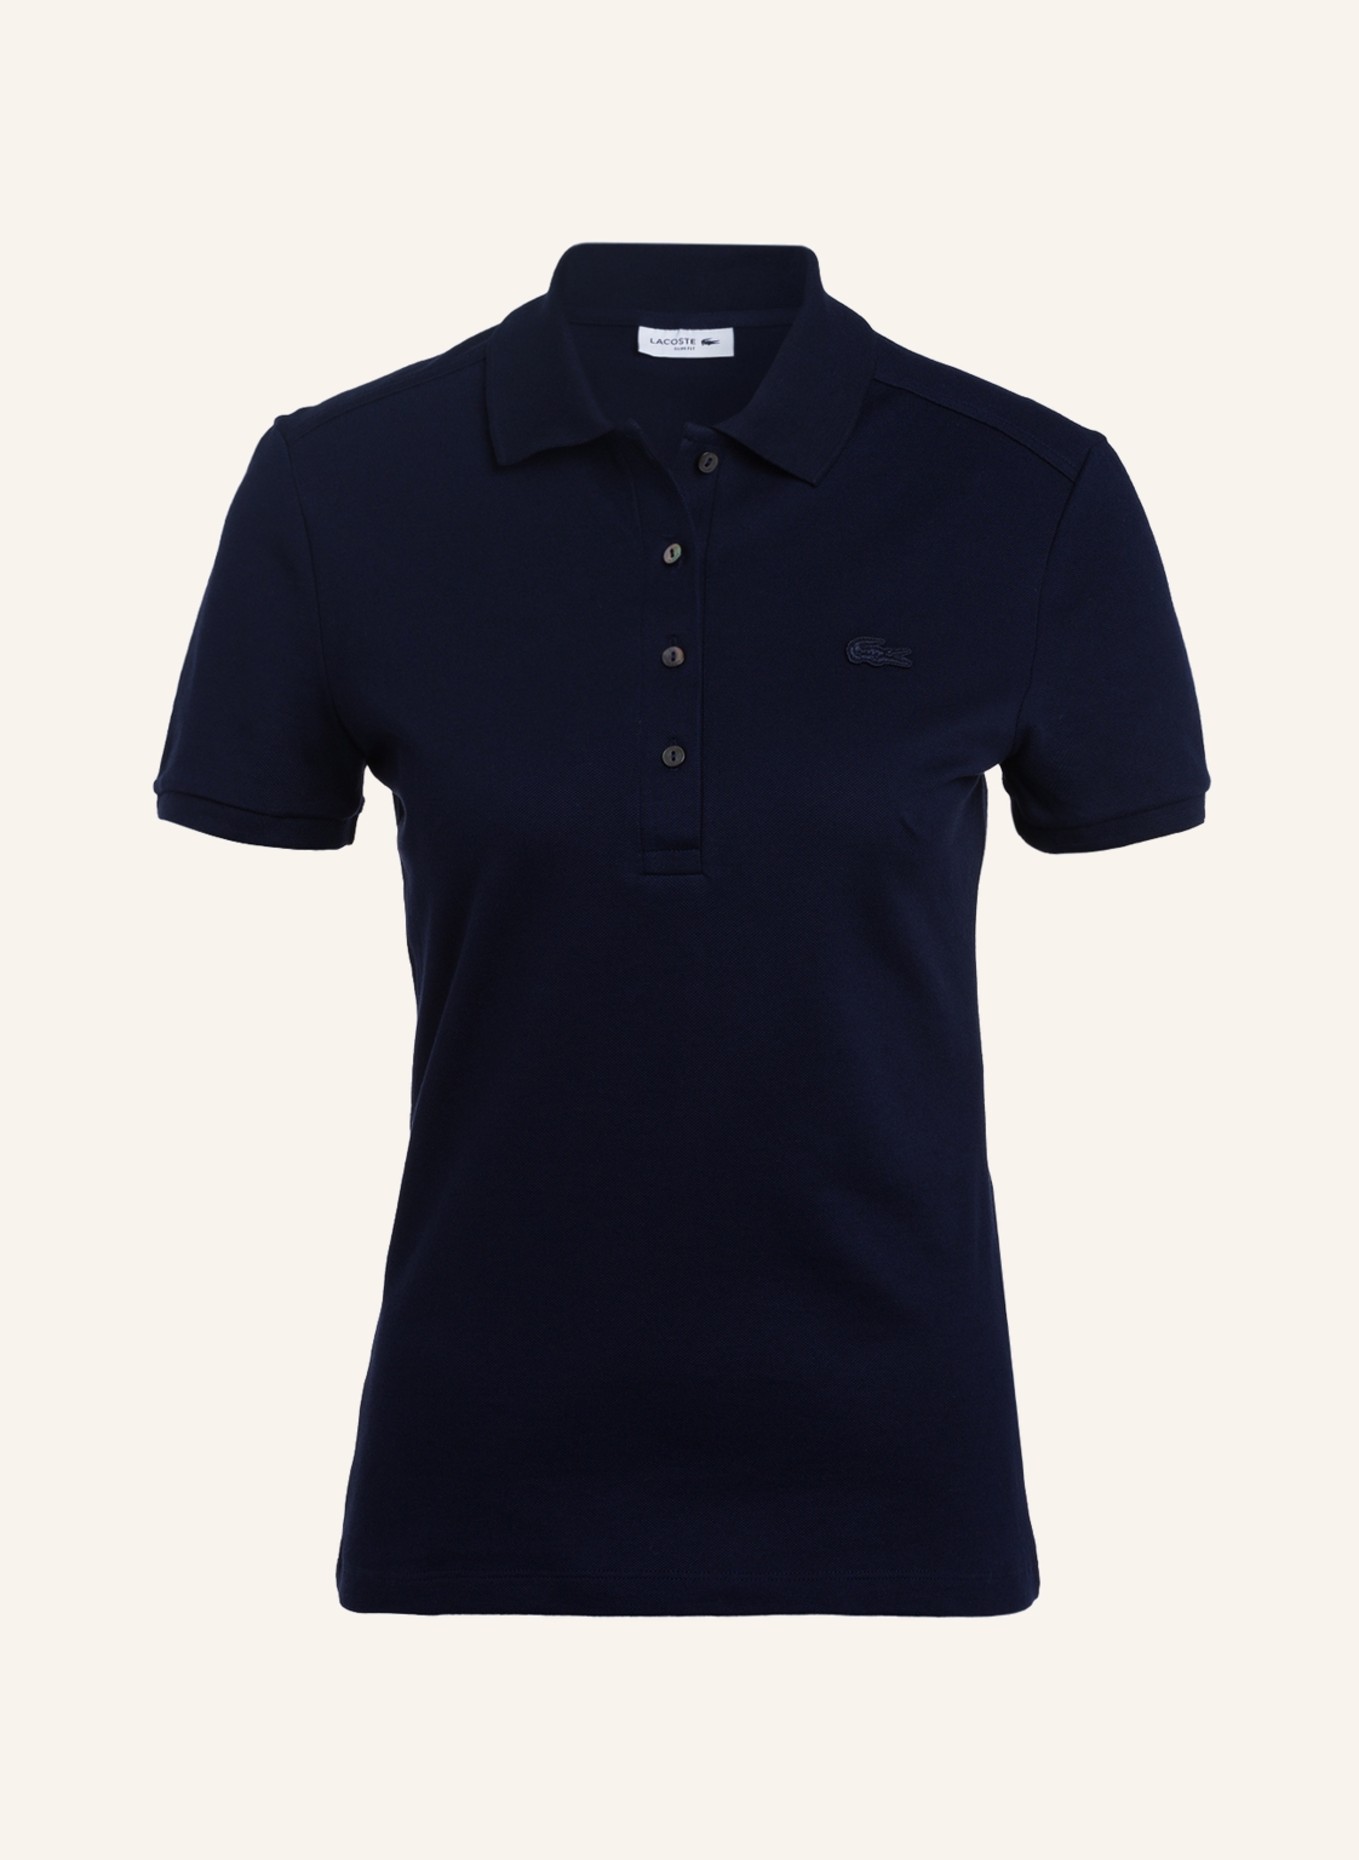 LACOSTE Piqué-Poloshirt Slim Fit, Farbe: NAVY (Bild 1)